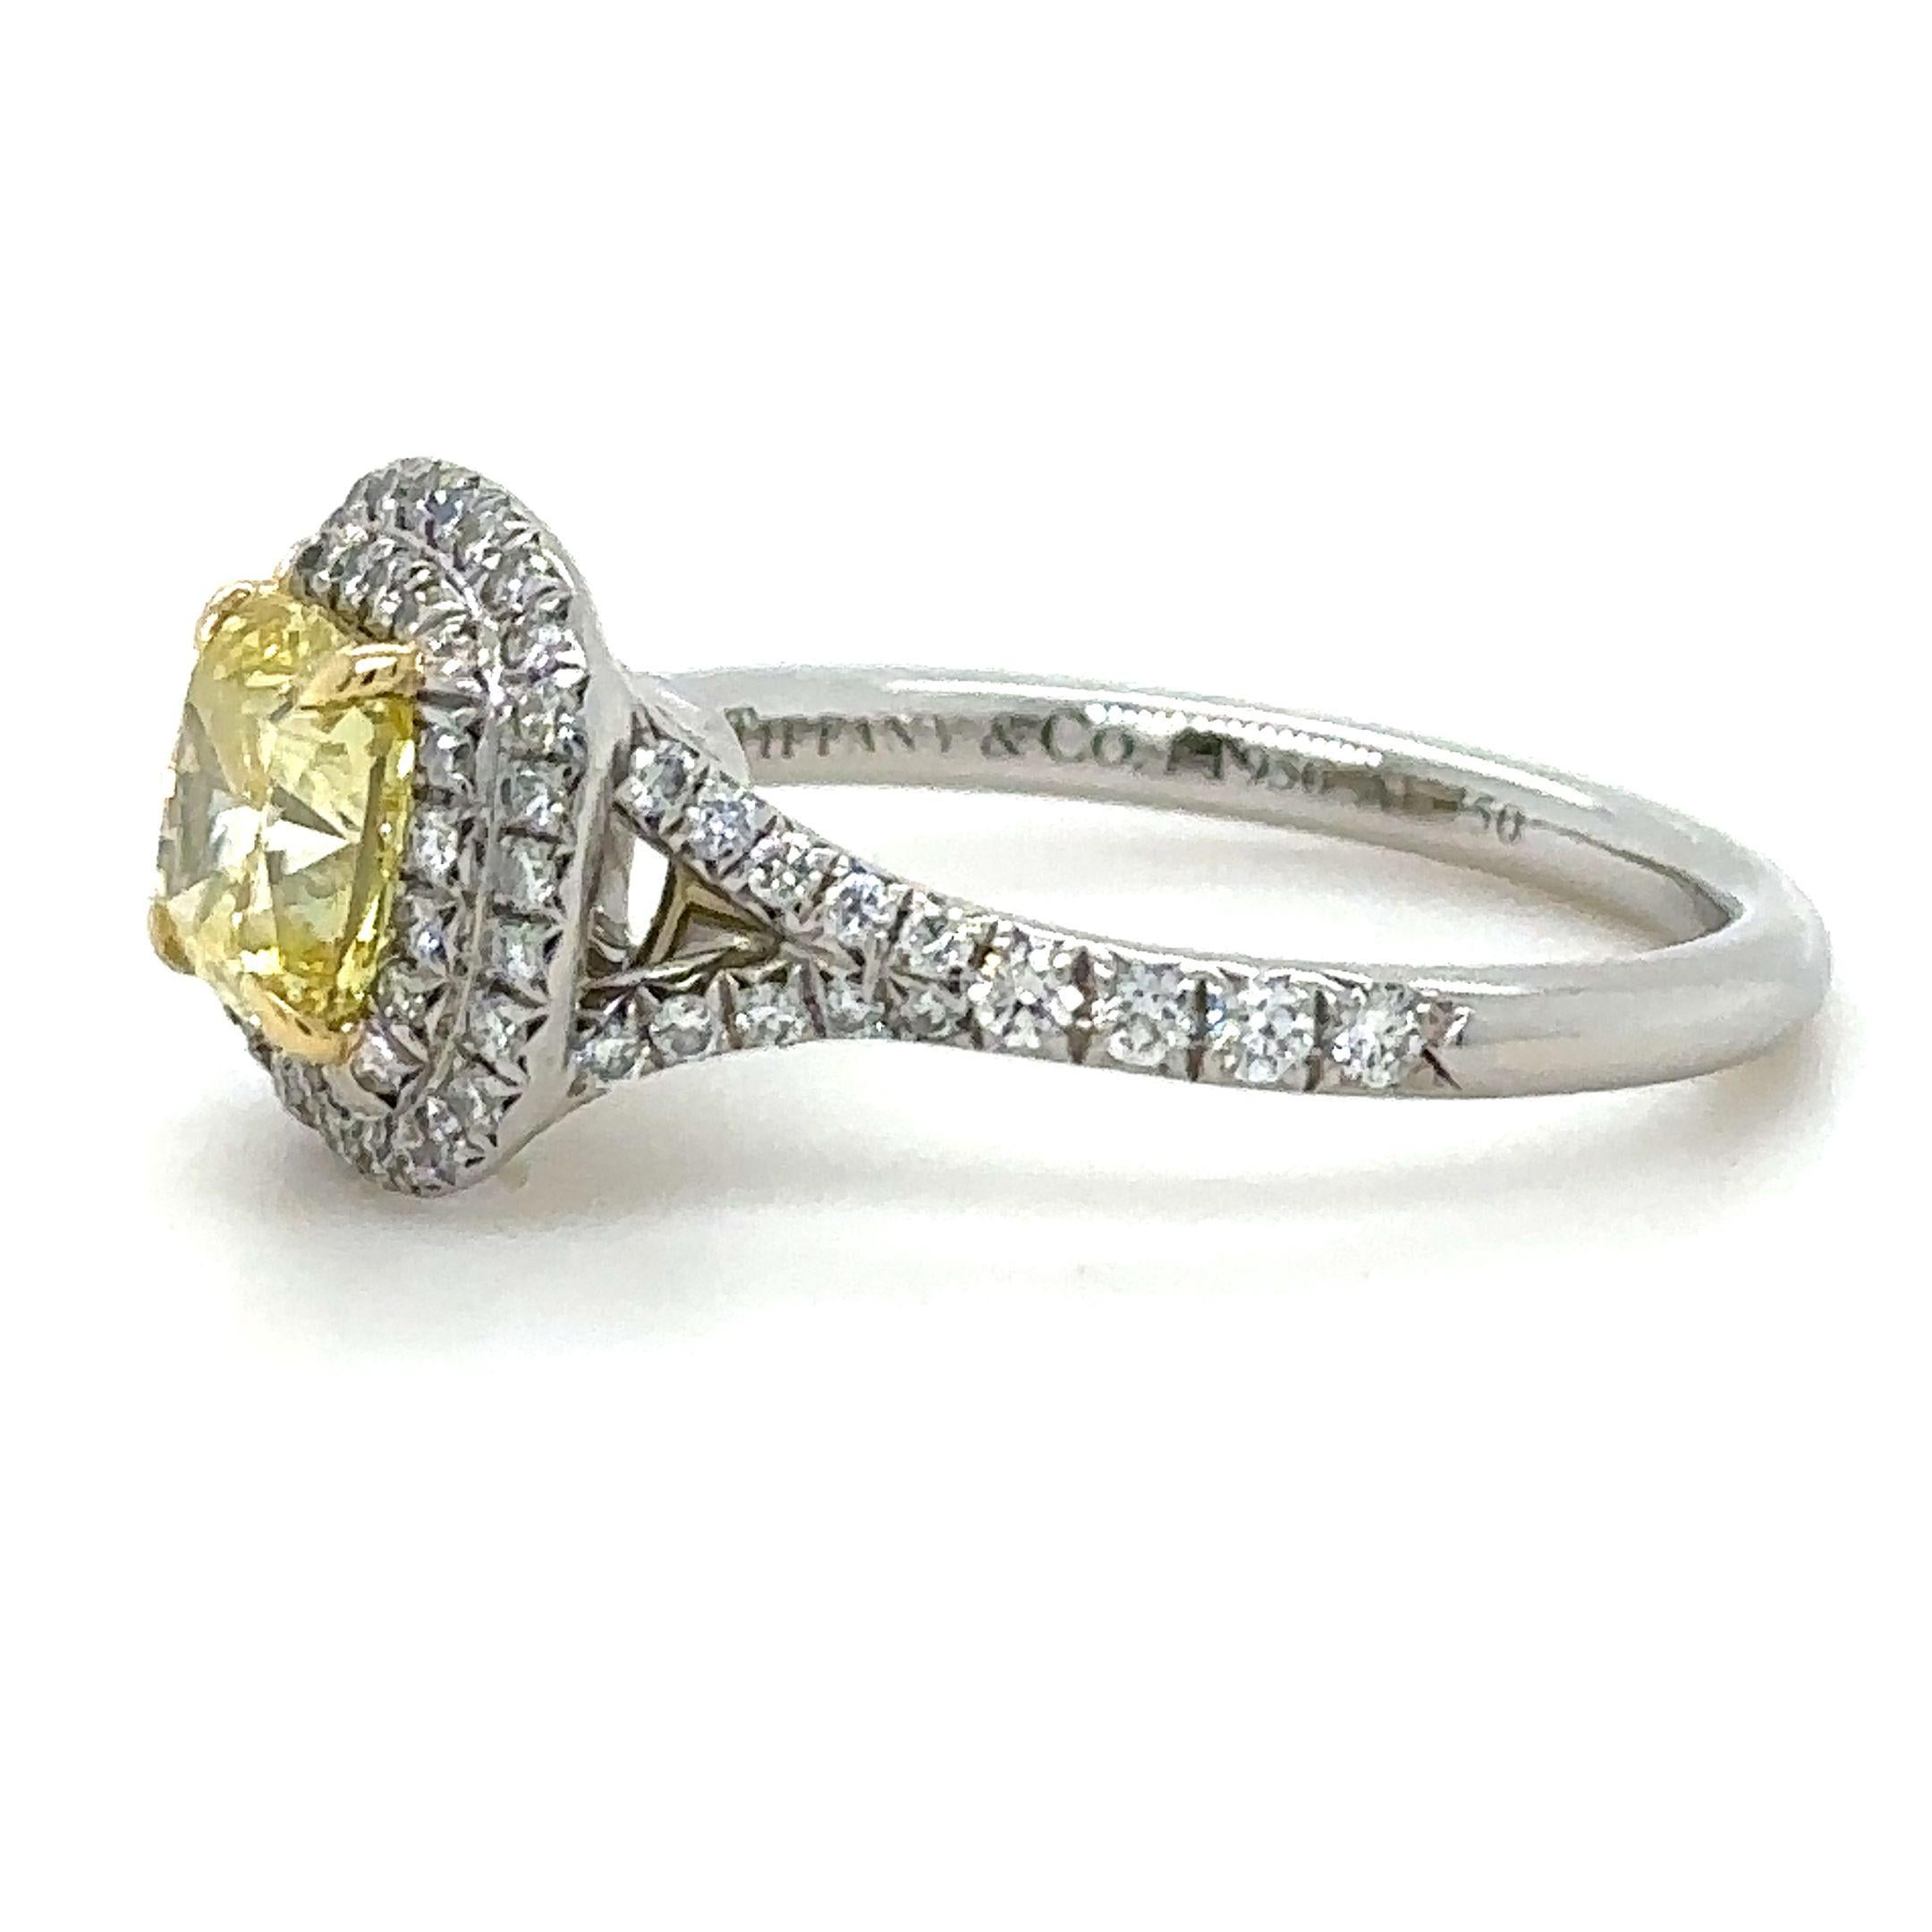 Cushion Cut Tiffany & Co Soleste Yellow Diamond Engagement Ring 1.23ct